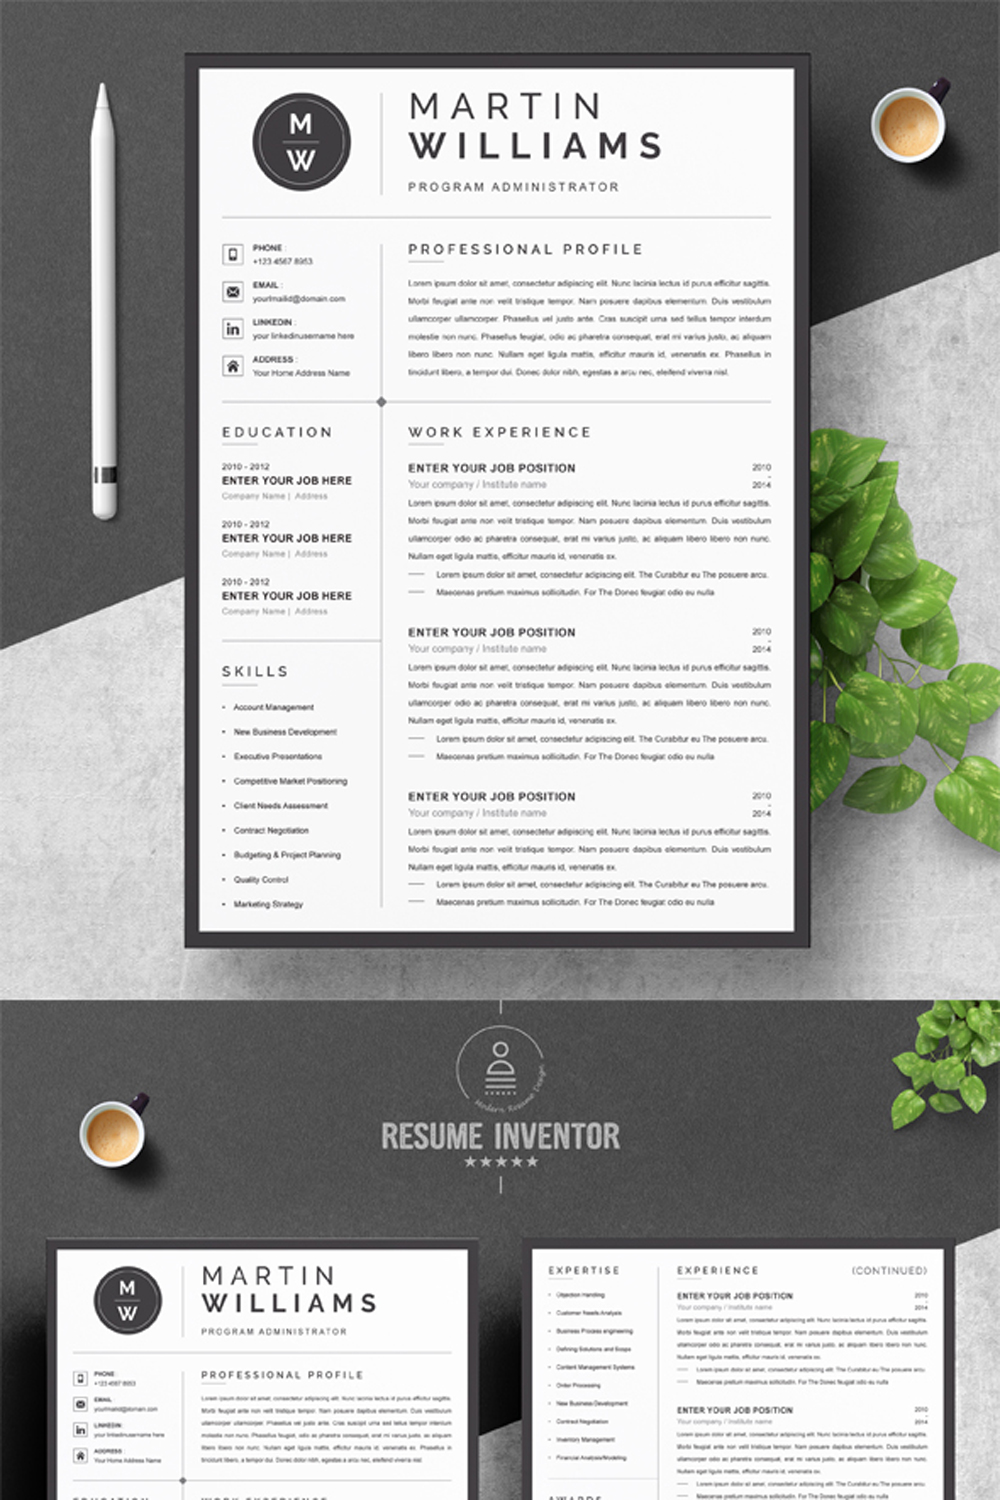 Program Administrator Resume Template | Best Designer Resume Template pinterest preview image.